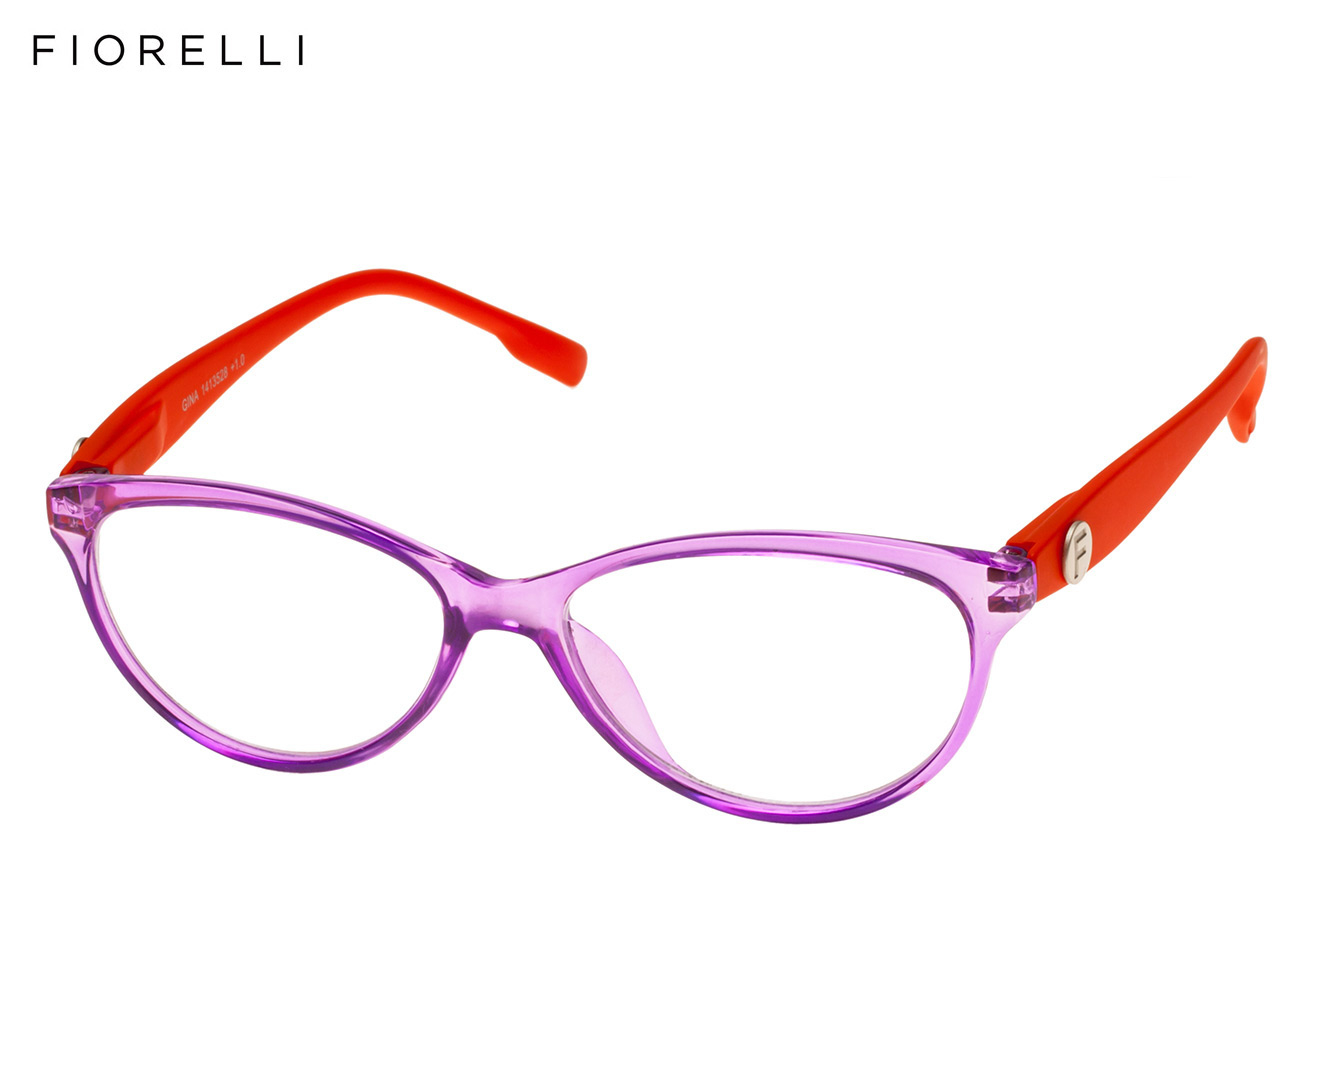 Fiorelli Women's Catwalk Gina Reading Glasses - Violet/Melon ...